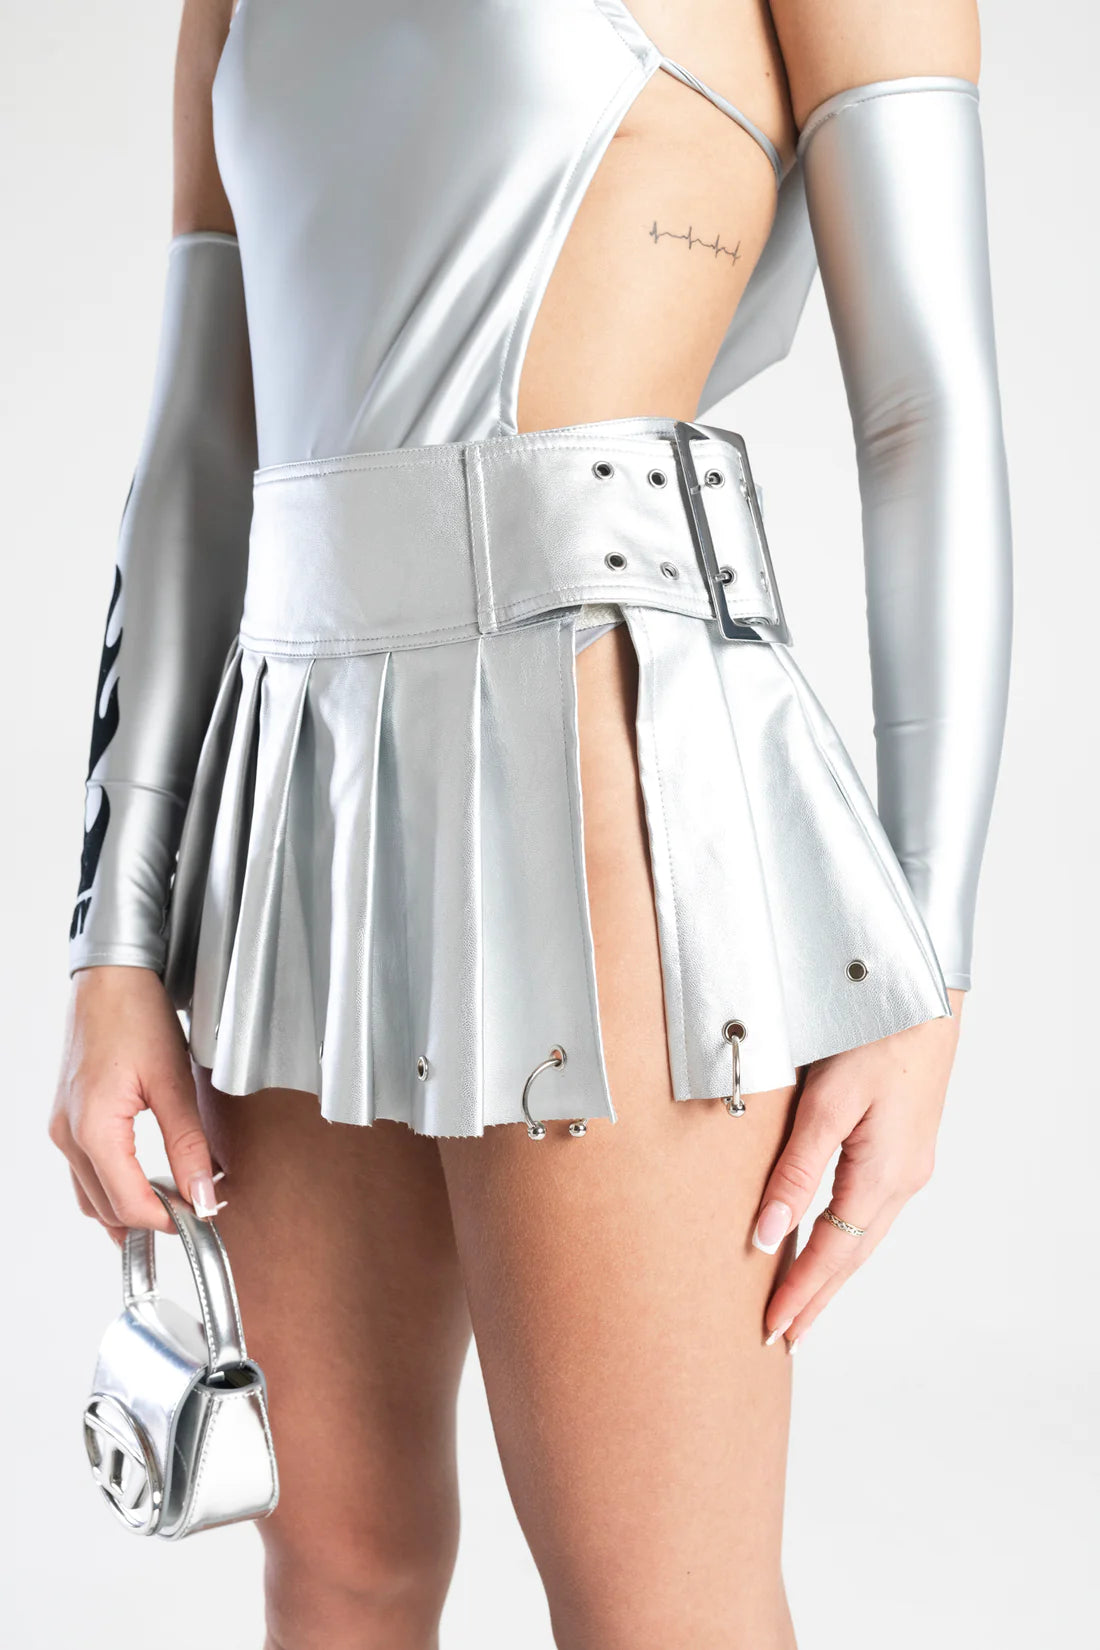 zilveren pvc rok, techno outfit